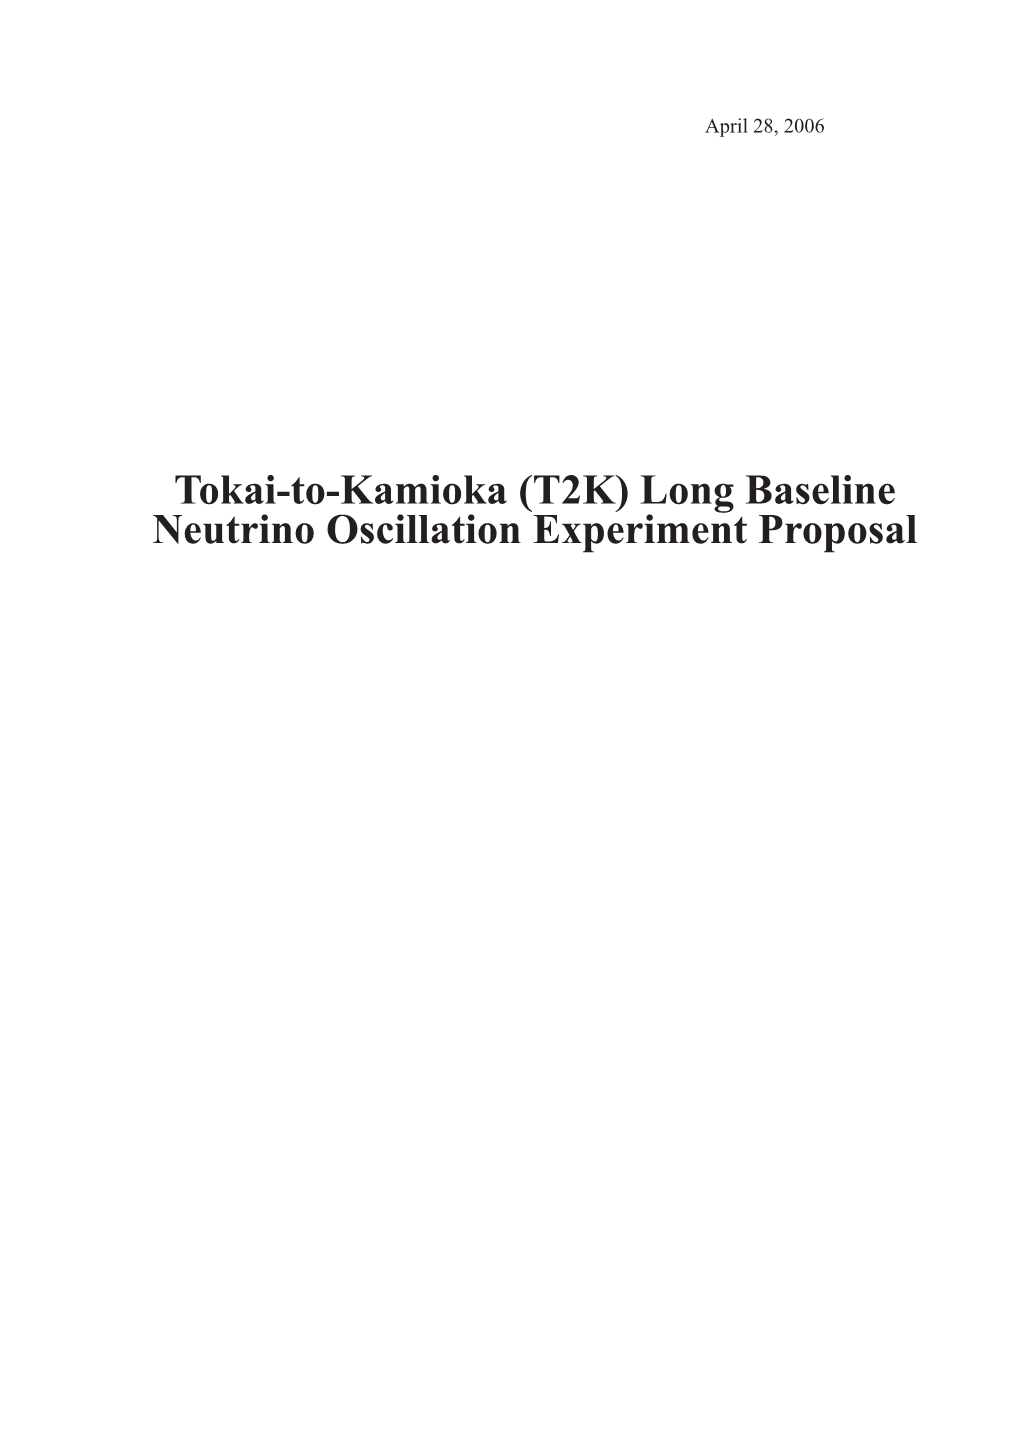 Tokai-To-Kamioka (T2K) Long Baseline Neutrino Oscillation